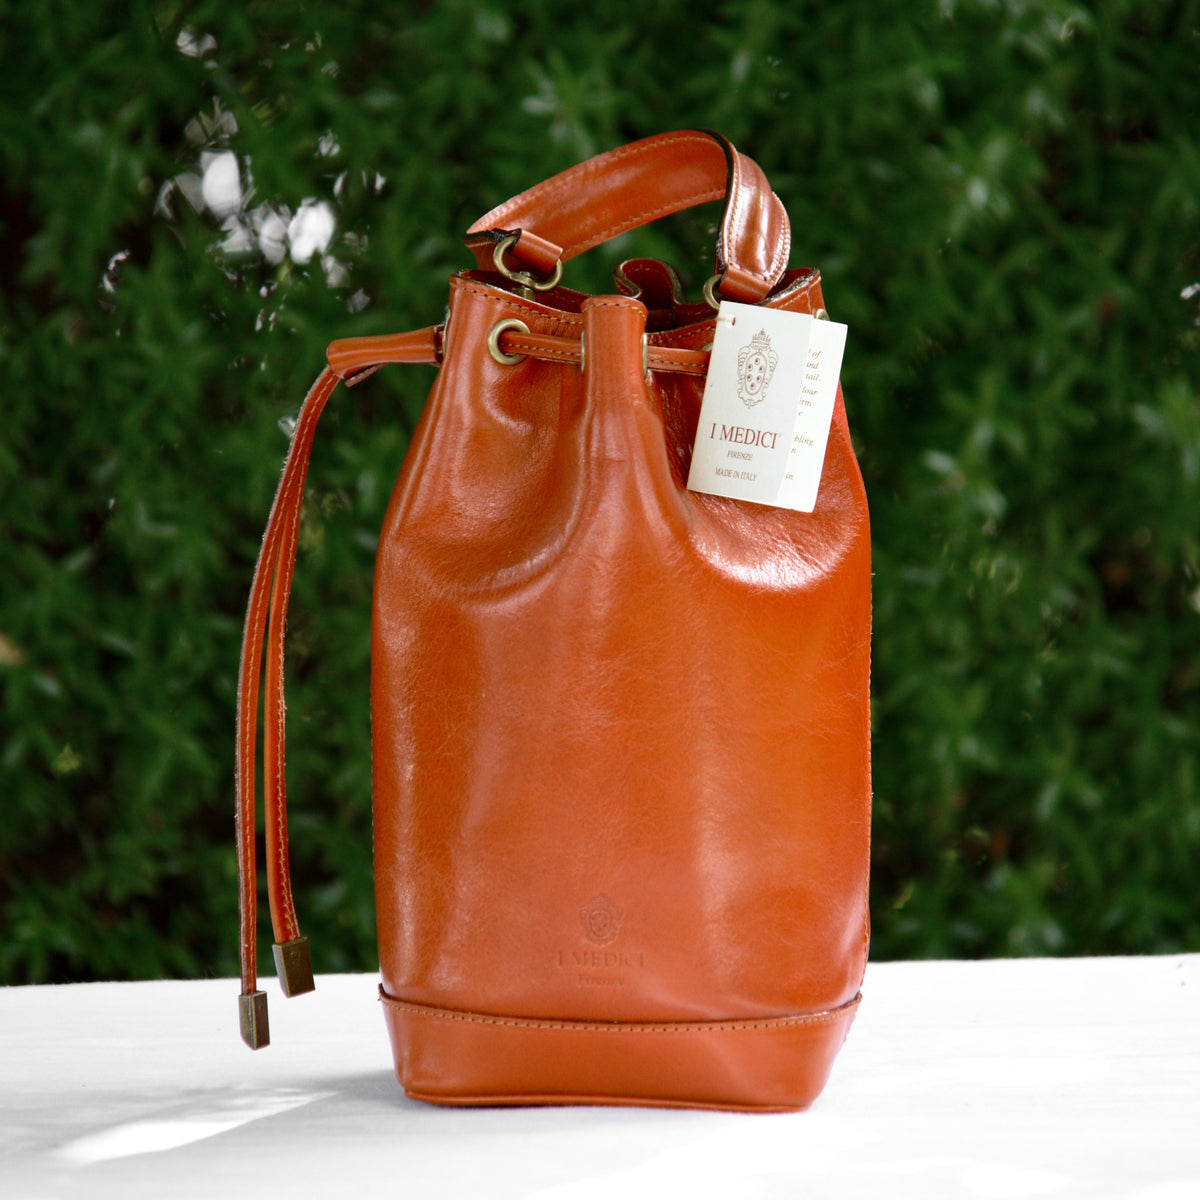 Todi Bucket Bag, Italian Leather, Made in Italy - My Italian Decor